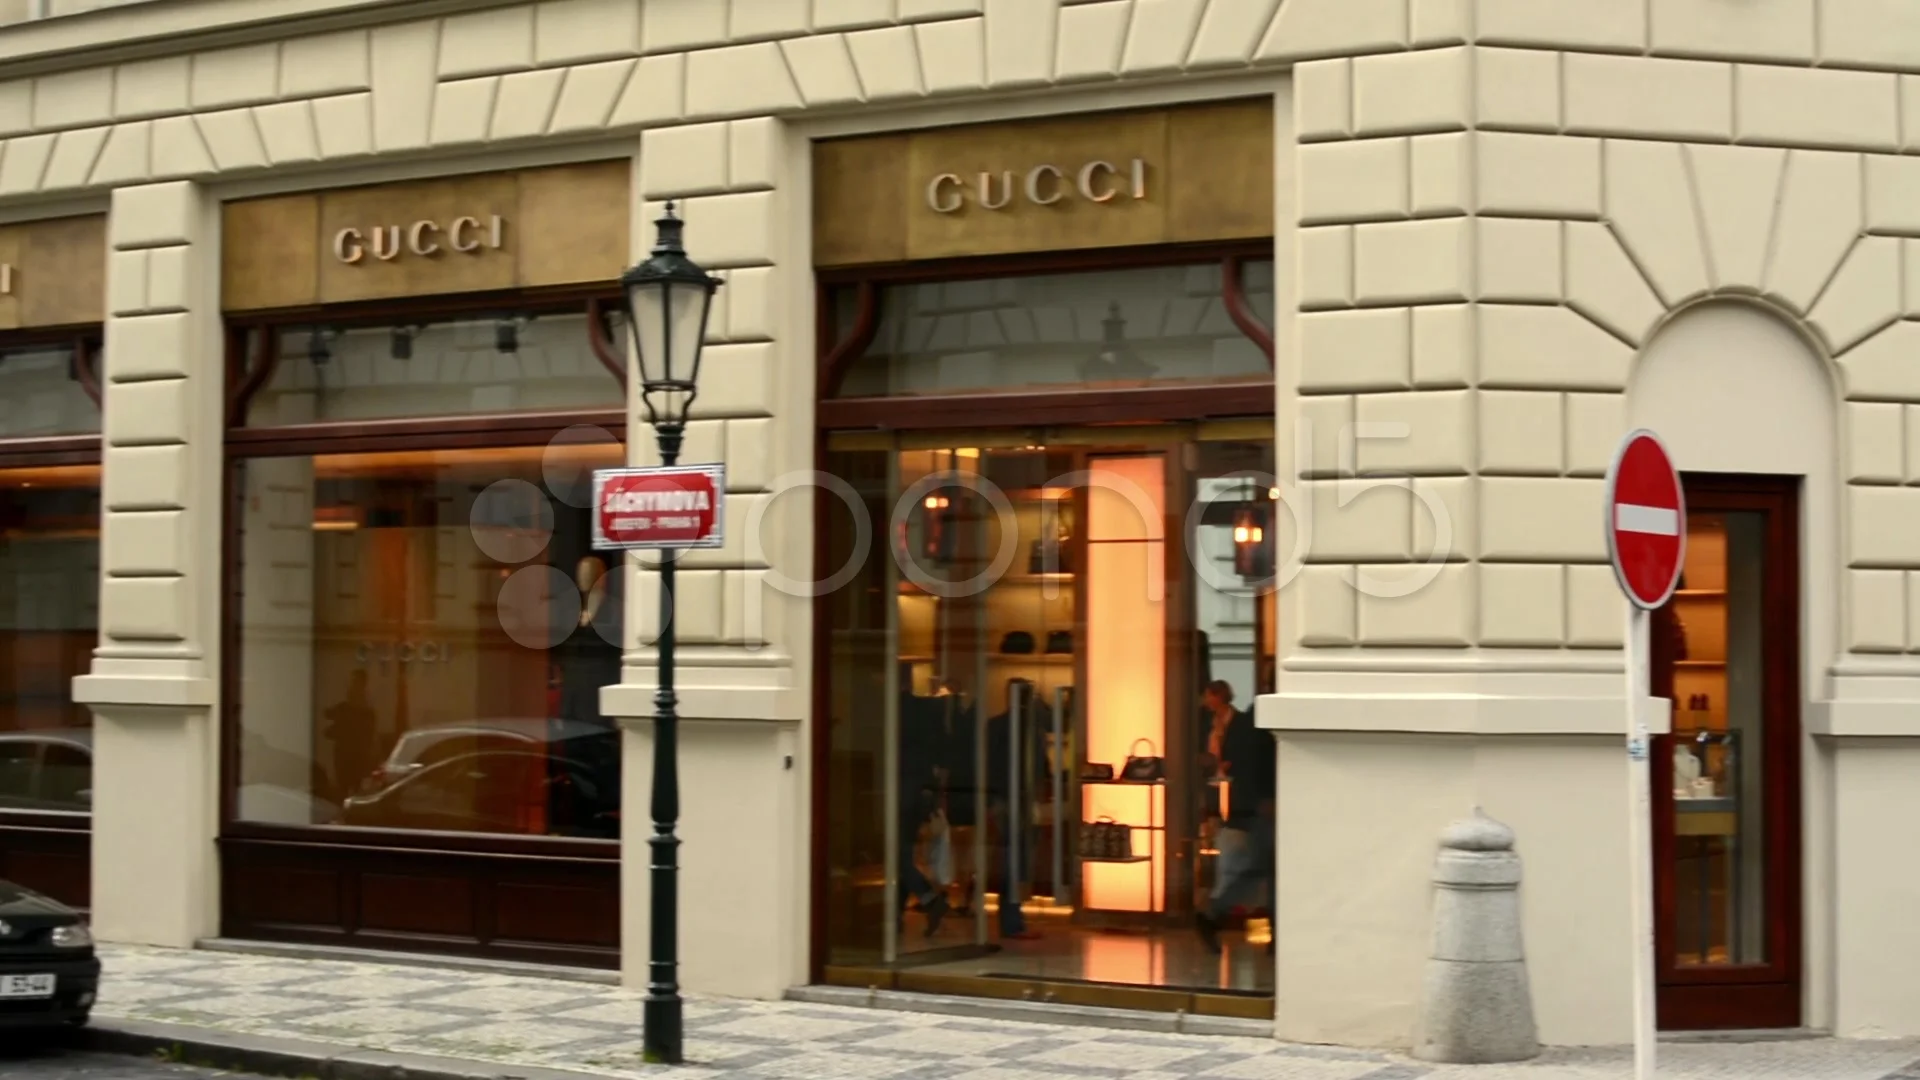 Gucci in South Coast Plaza luxury shoppi, Stock Video